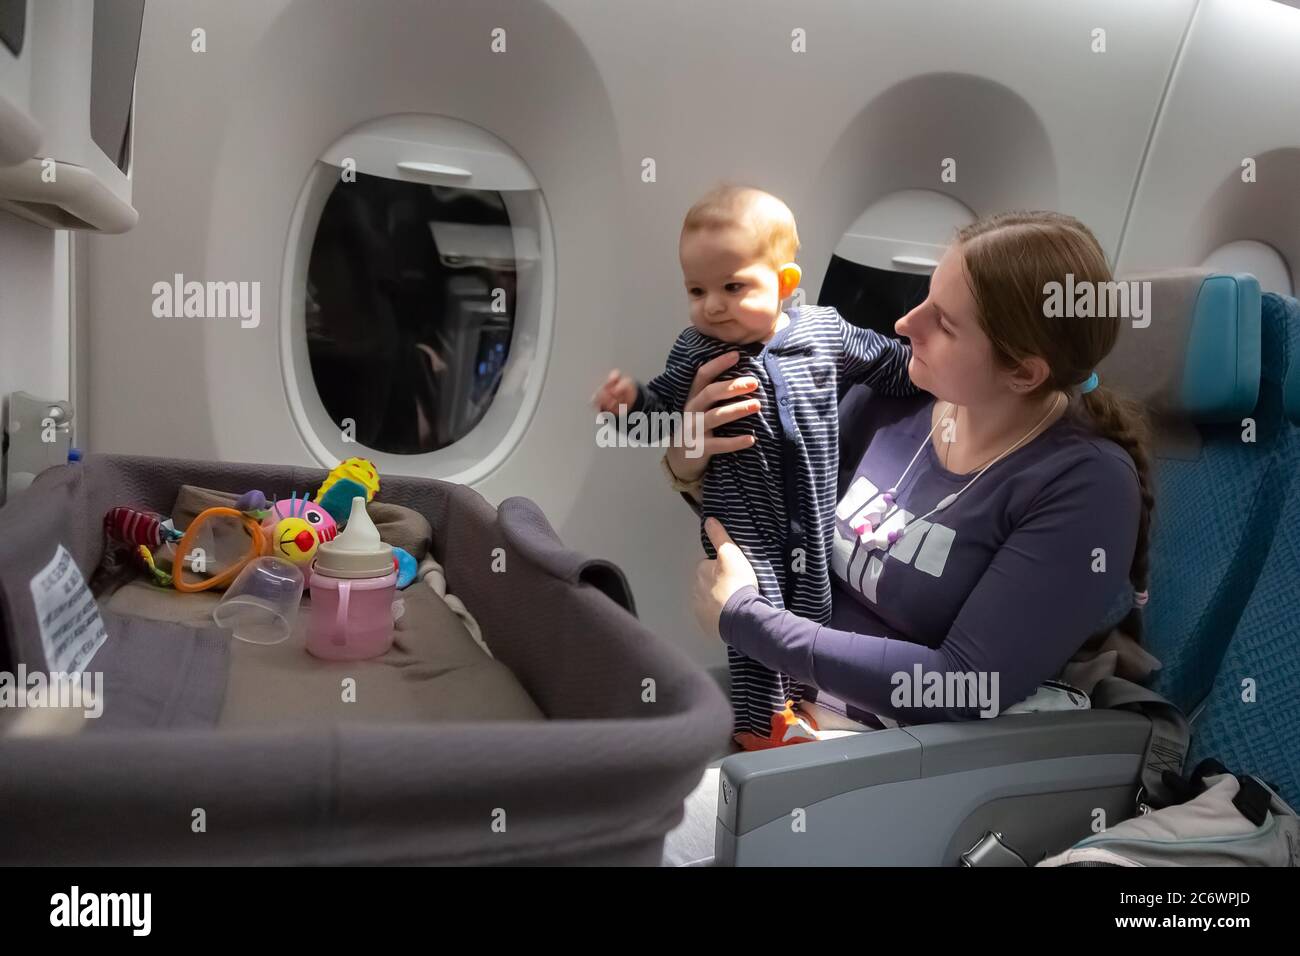 airplane baby bassinet